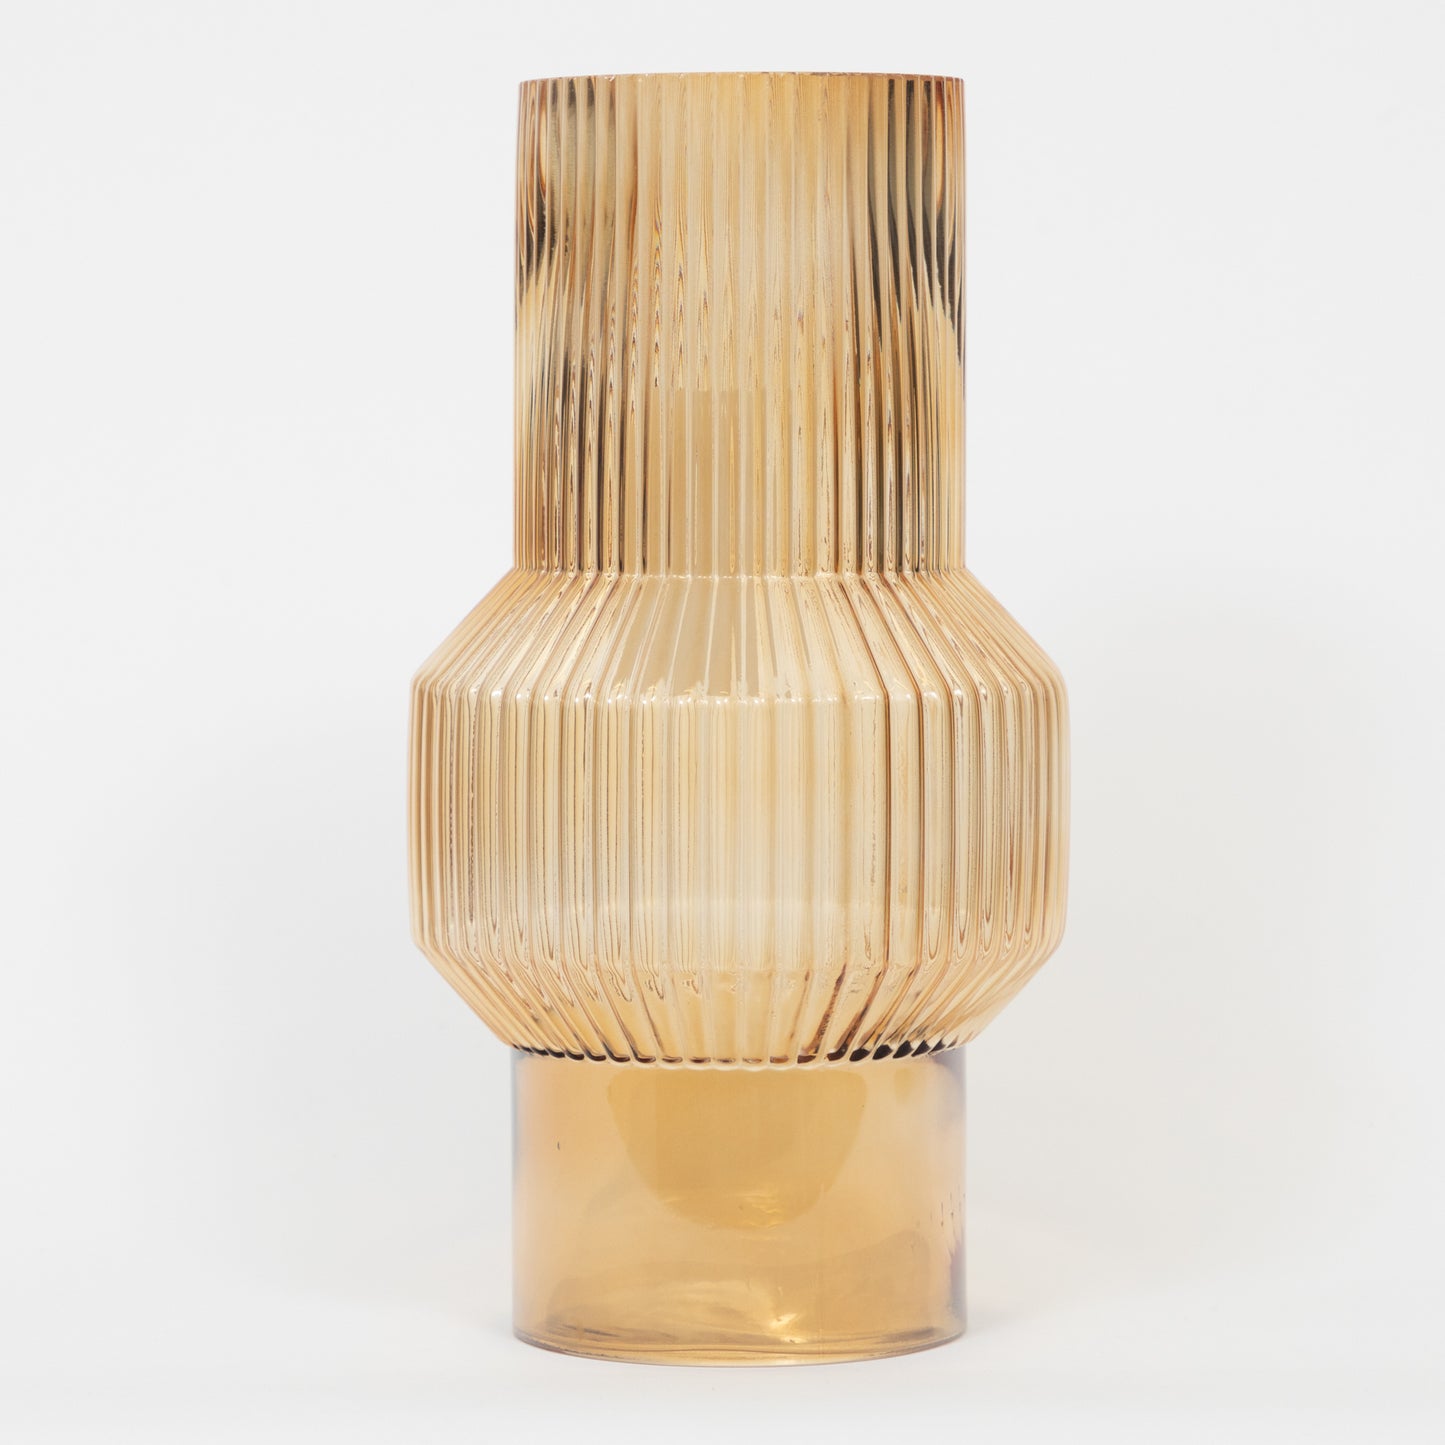 LIGHT & LIVING Leila Glass Vase in BROWN (Large)